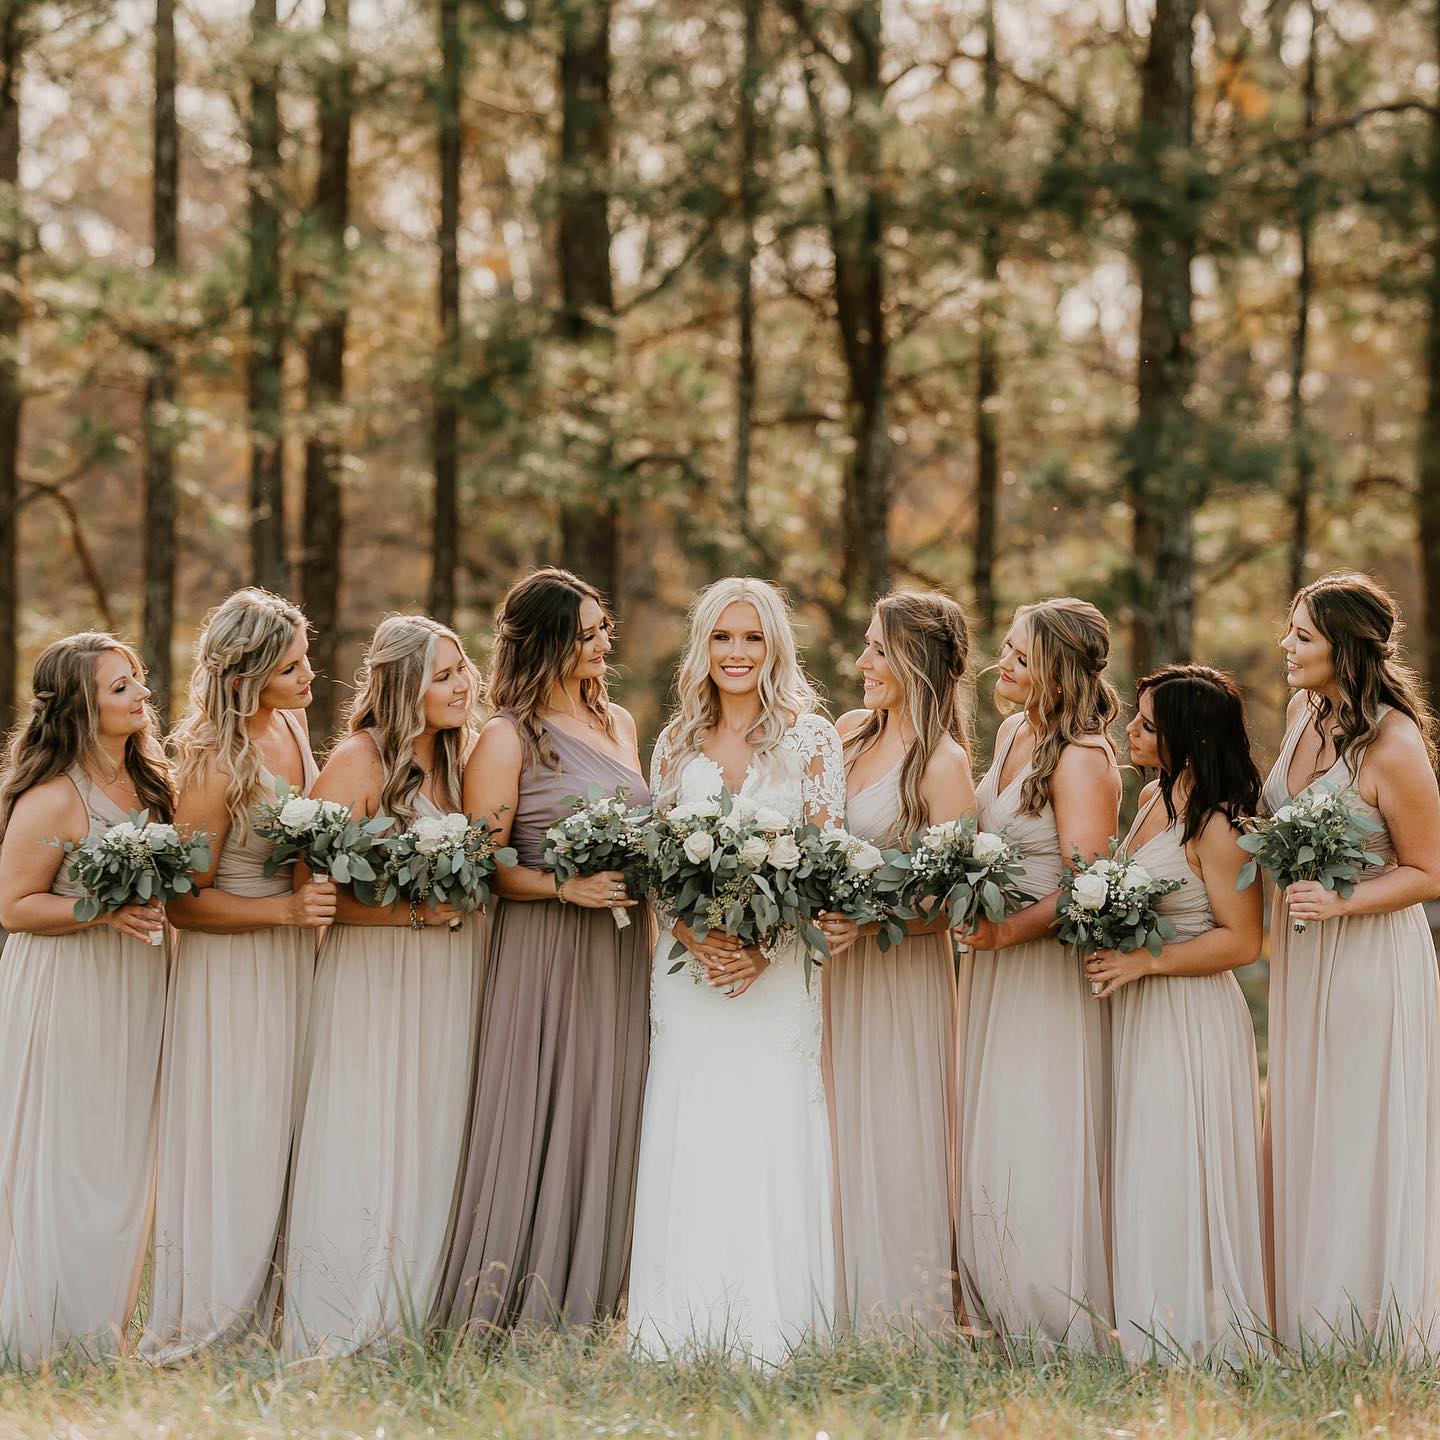 Fall Wedding Color Ideas & Inspiration - Rustic Wedding Chic